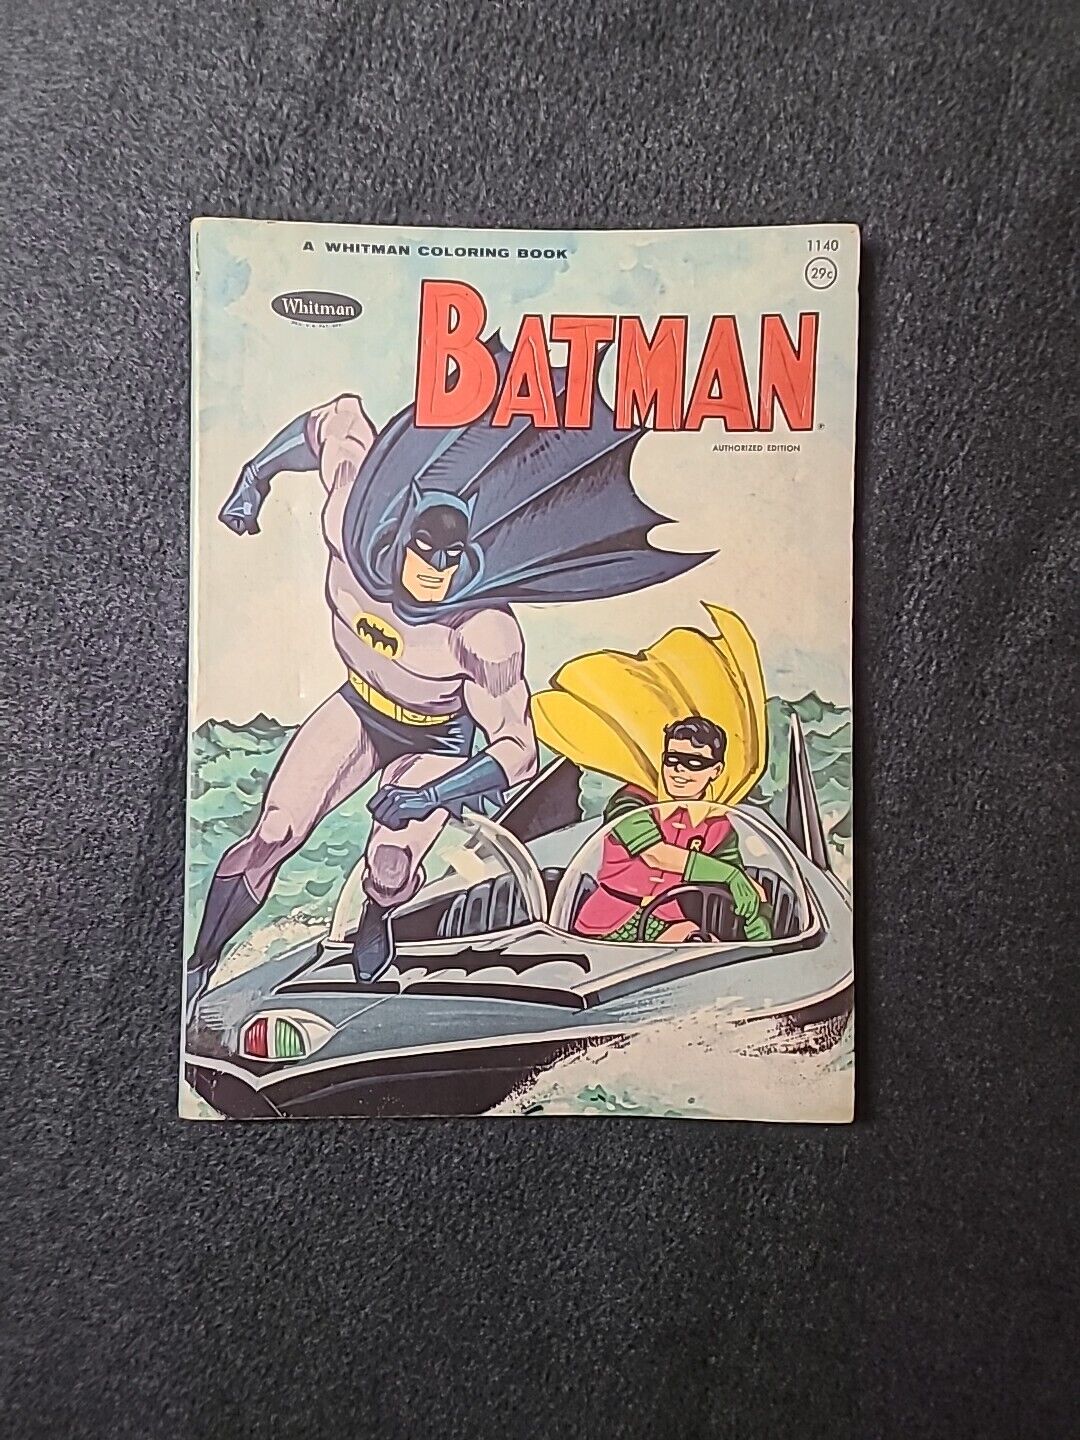 VINTAGE BATMAN & ROBIN COLORING BOOK WHITMAN RARE  1966 UNUSED